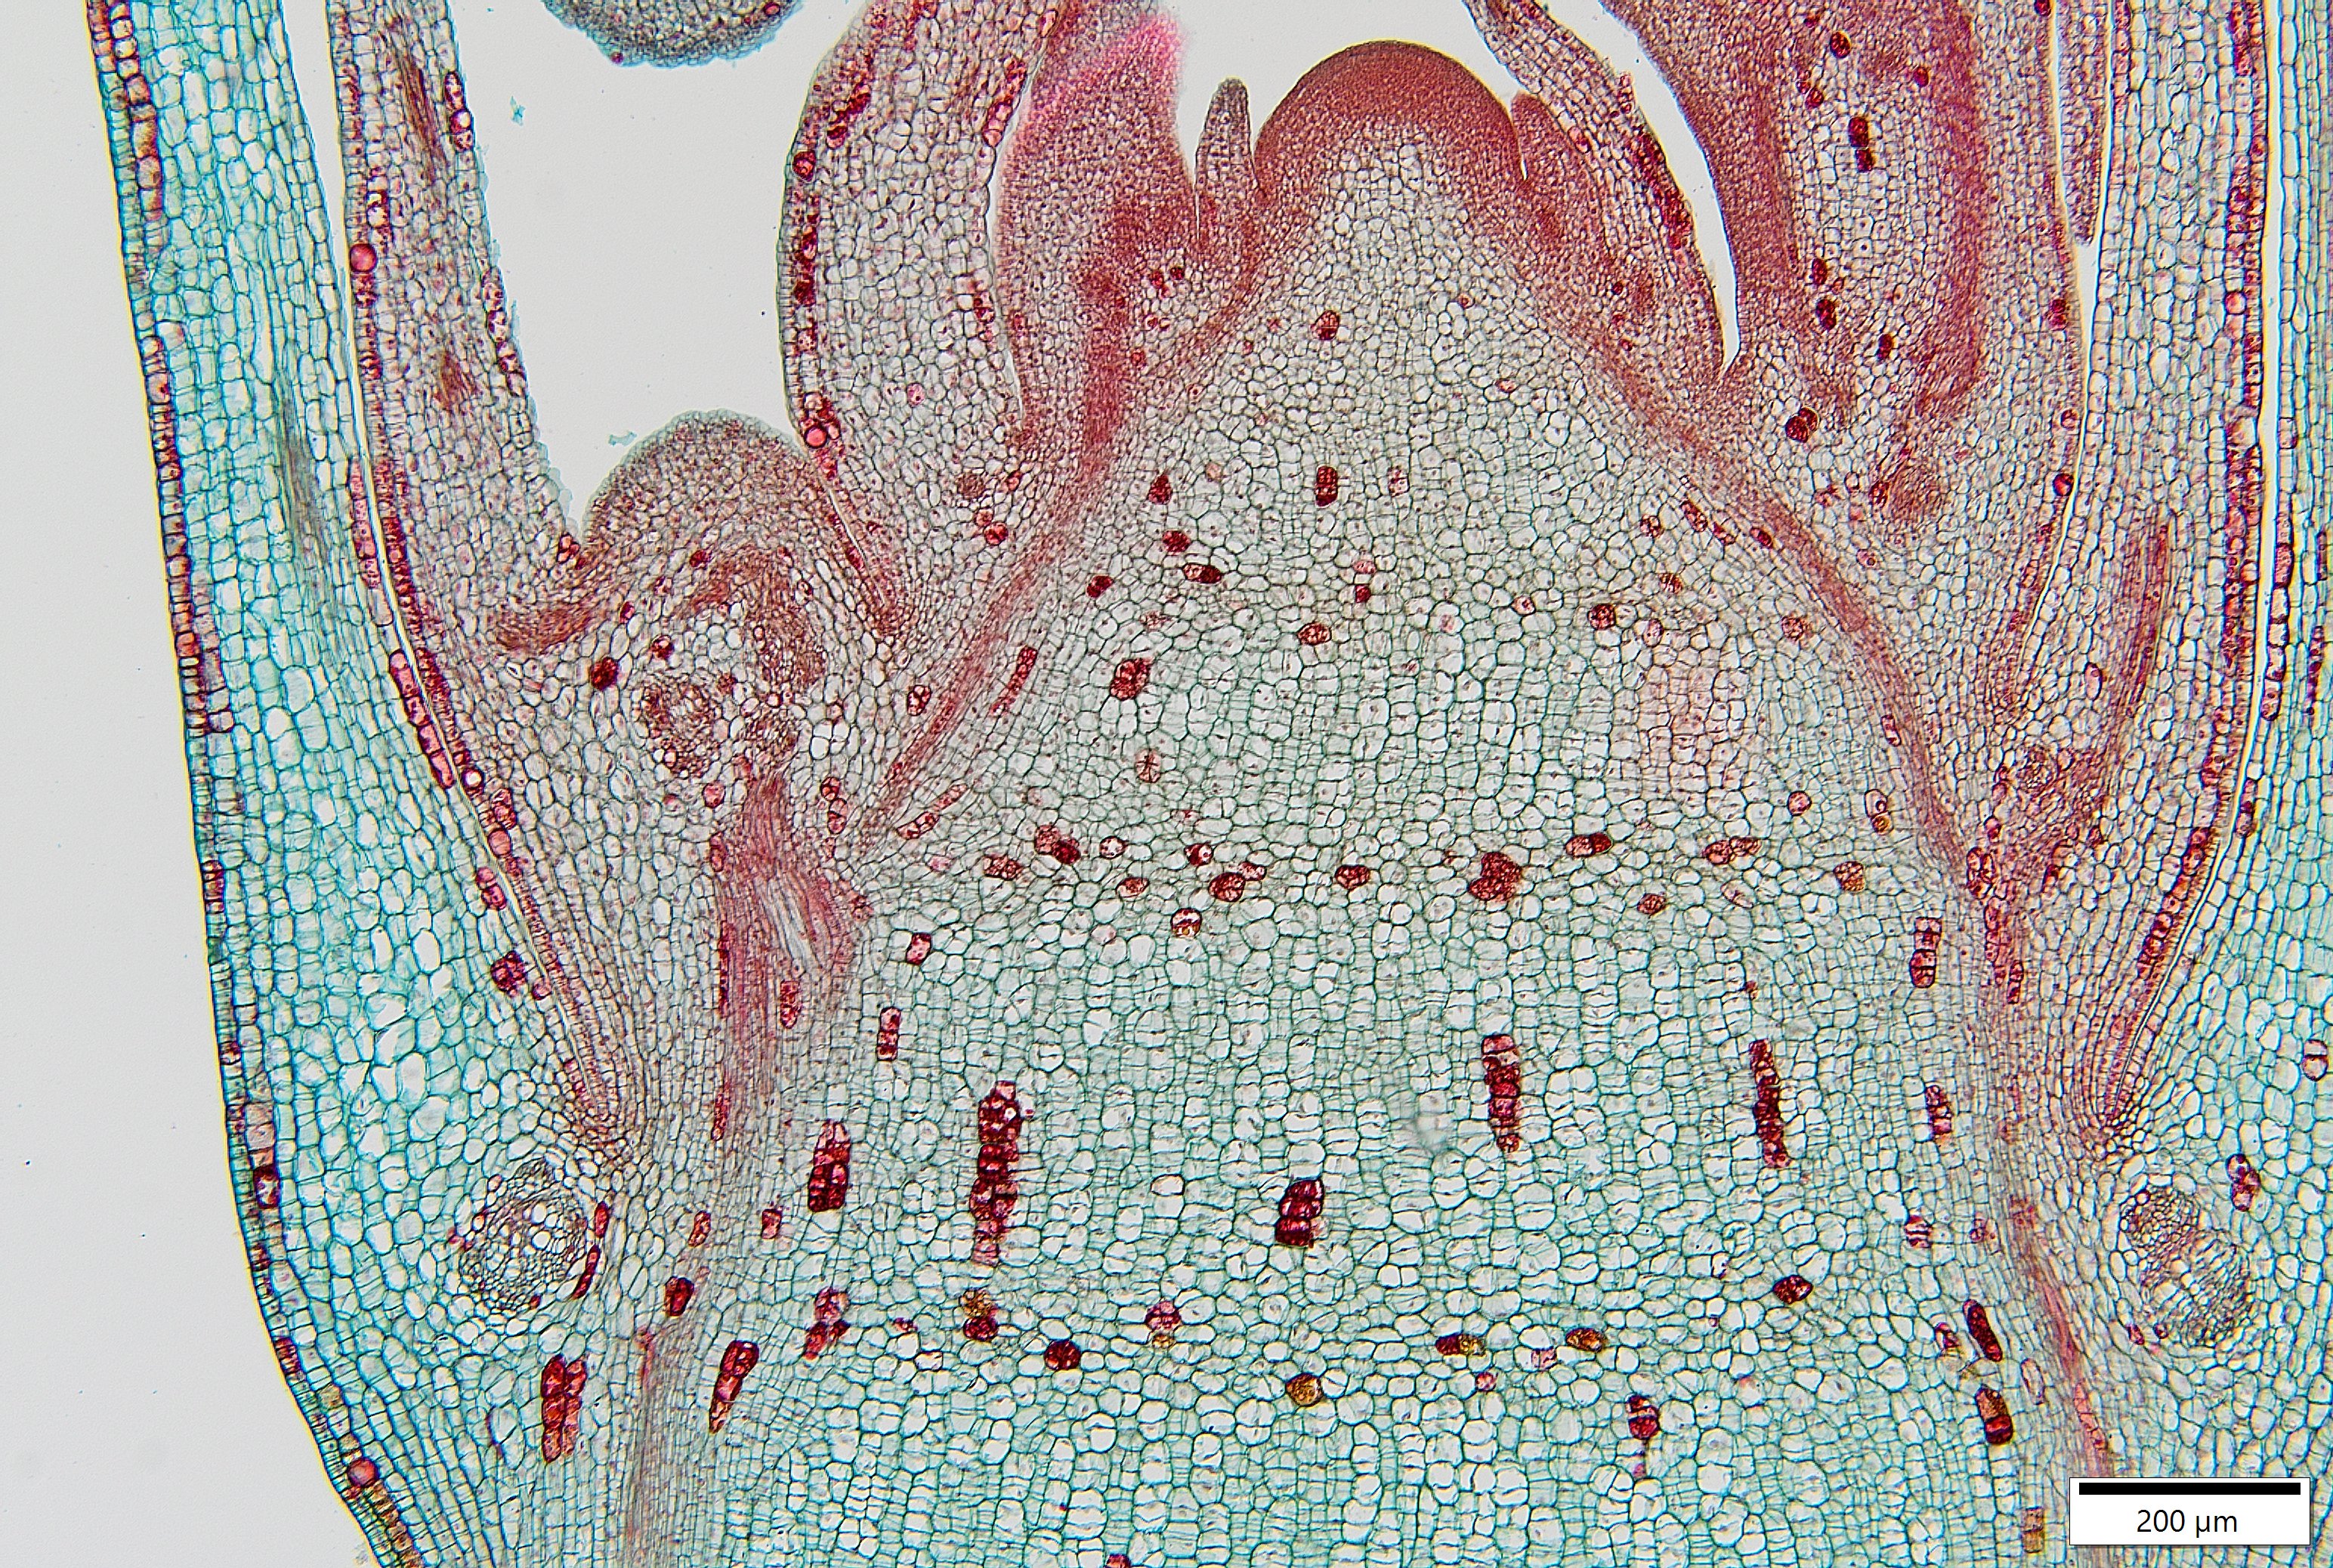 apical meristem cross section